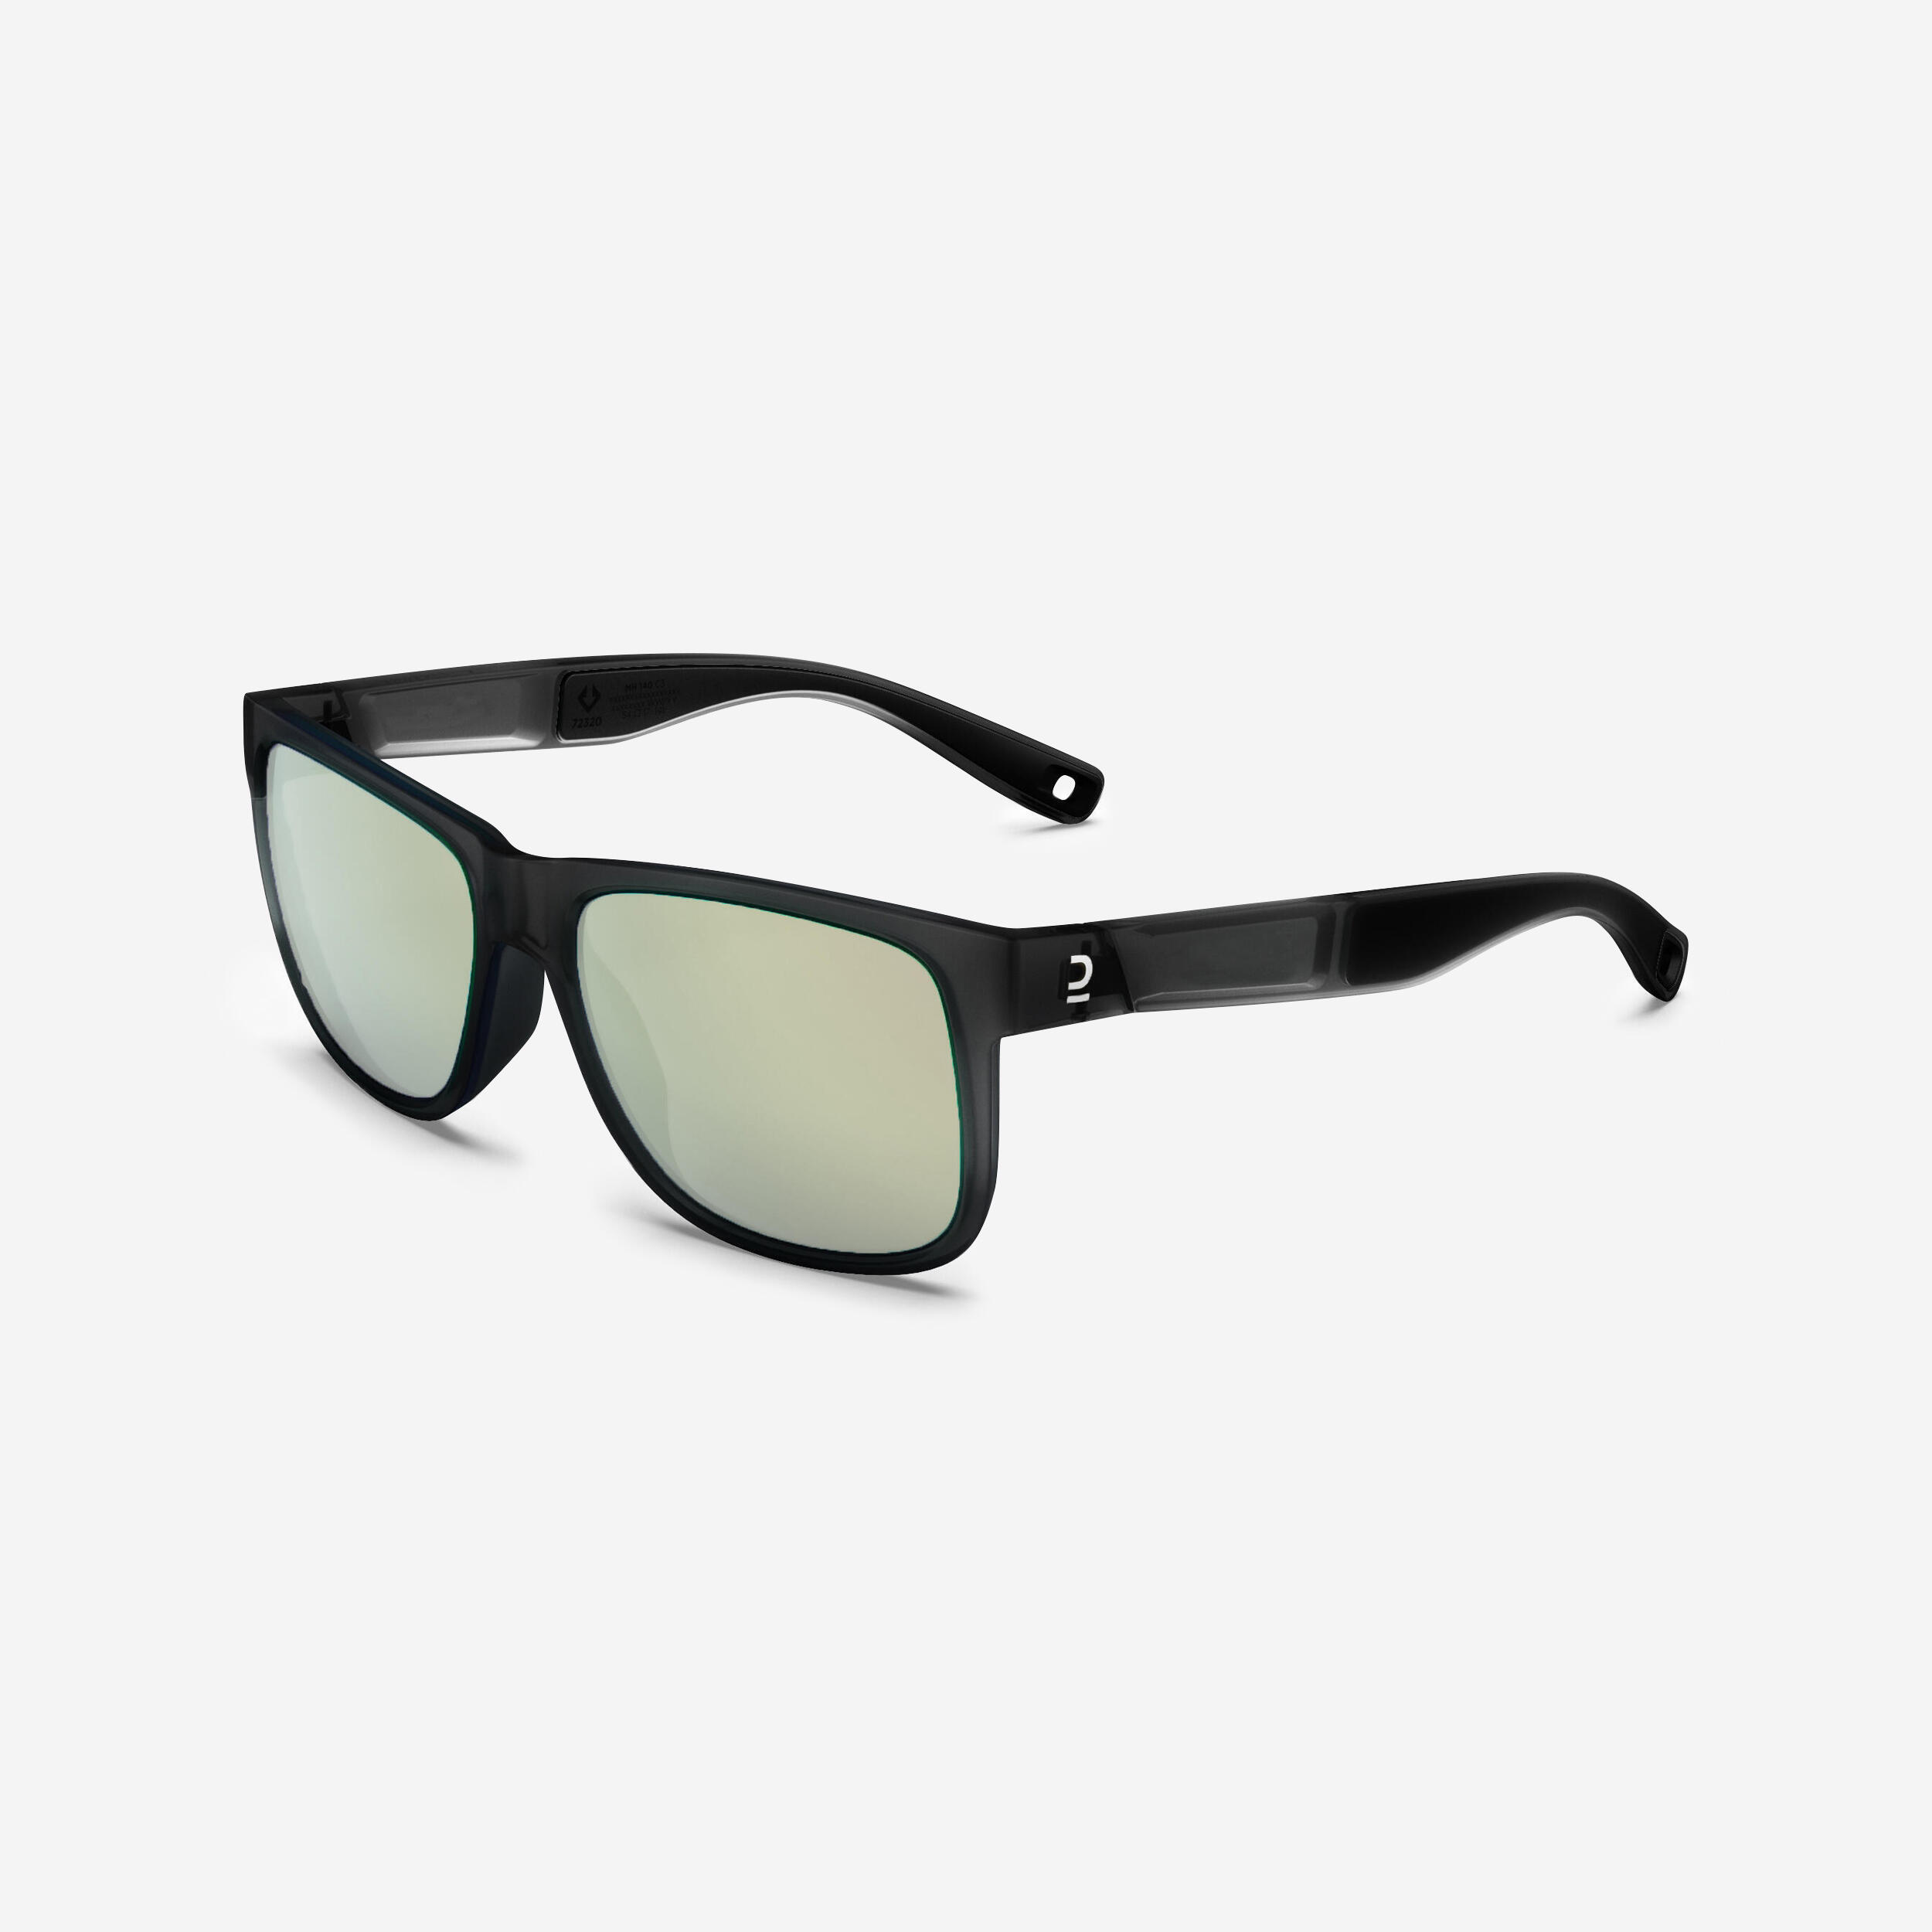 Hiking Category 3 Sunglasses - MH 140 Black